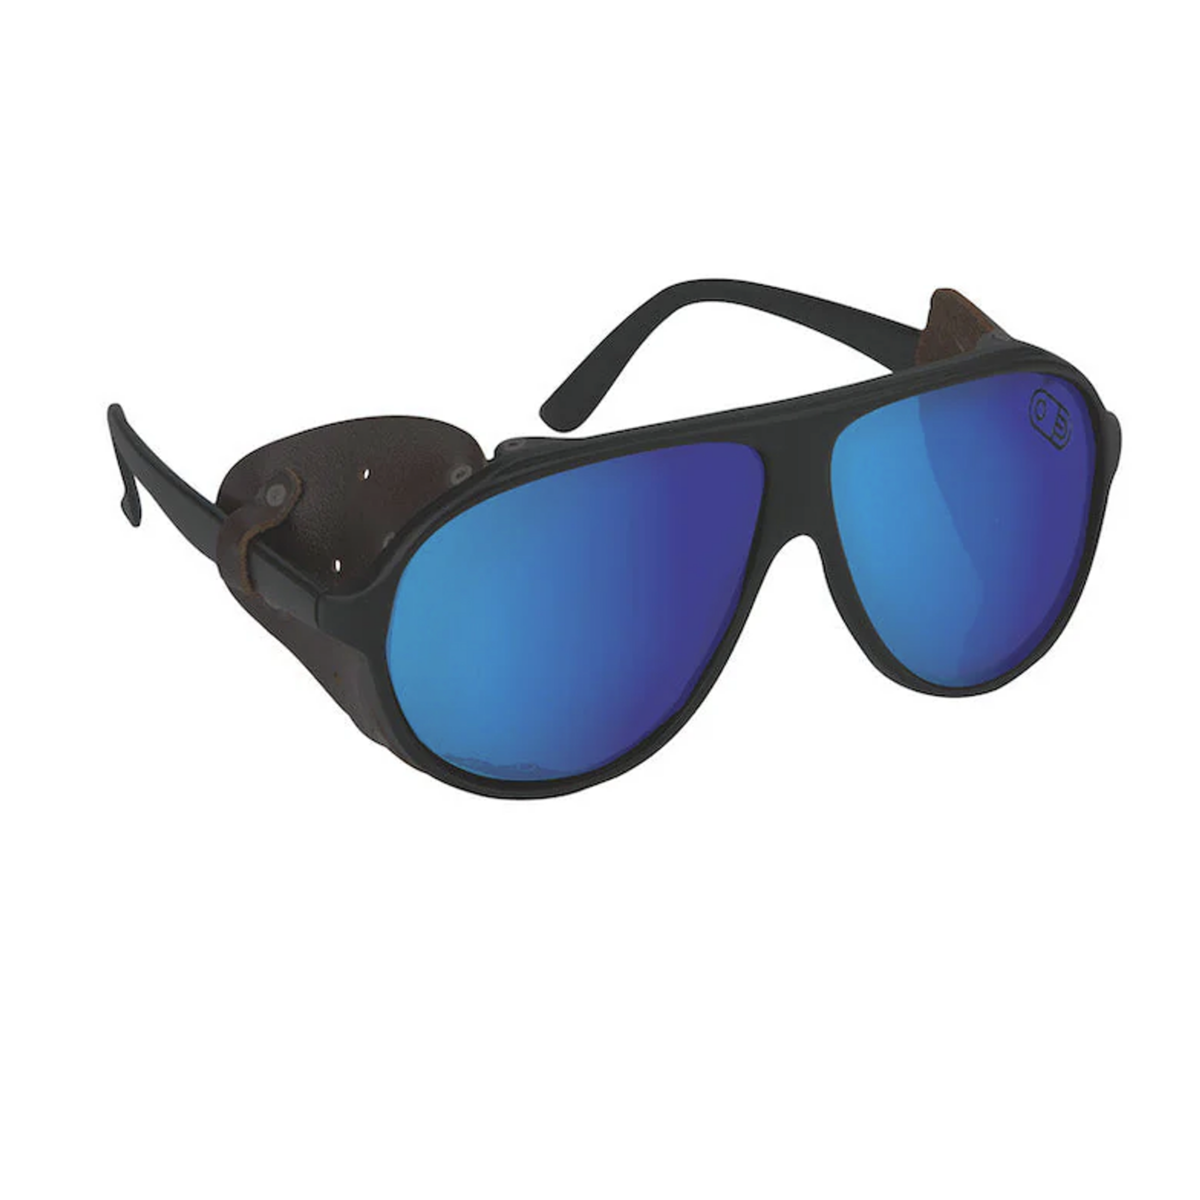 Airblaster Polarized Glacier Sunglasses - Assorted Colors